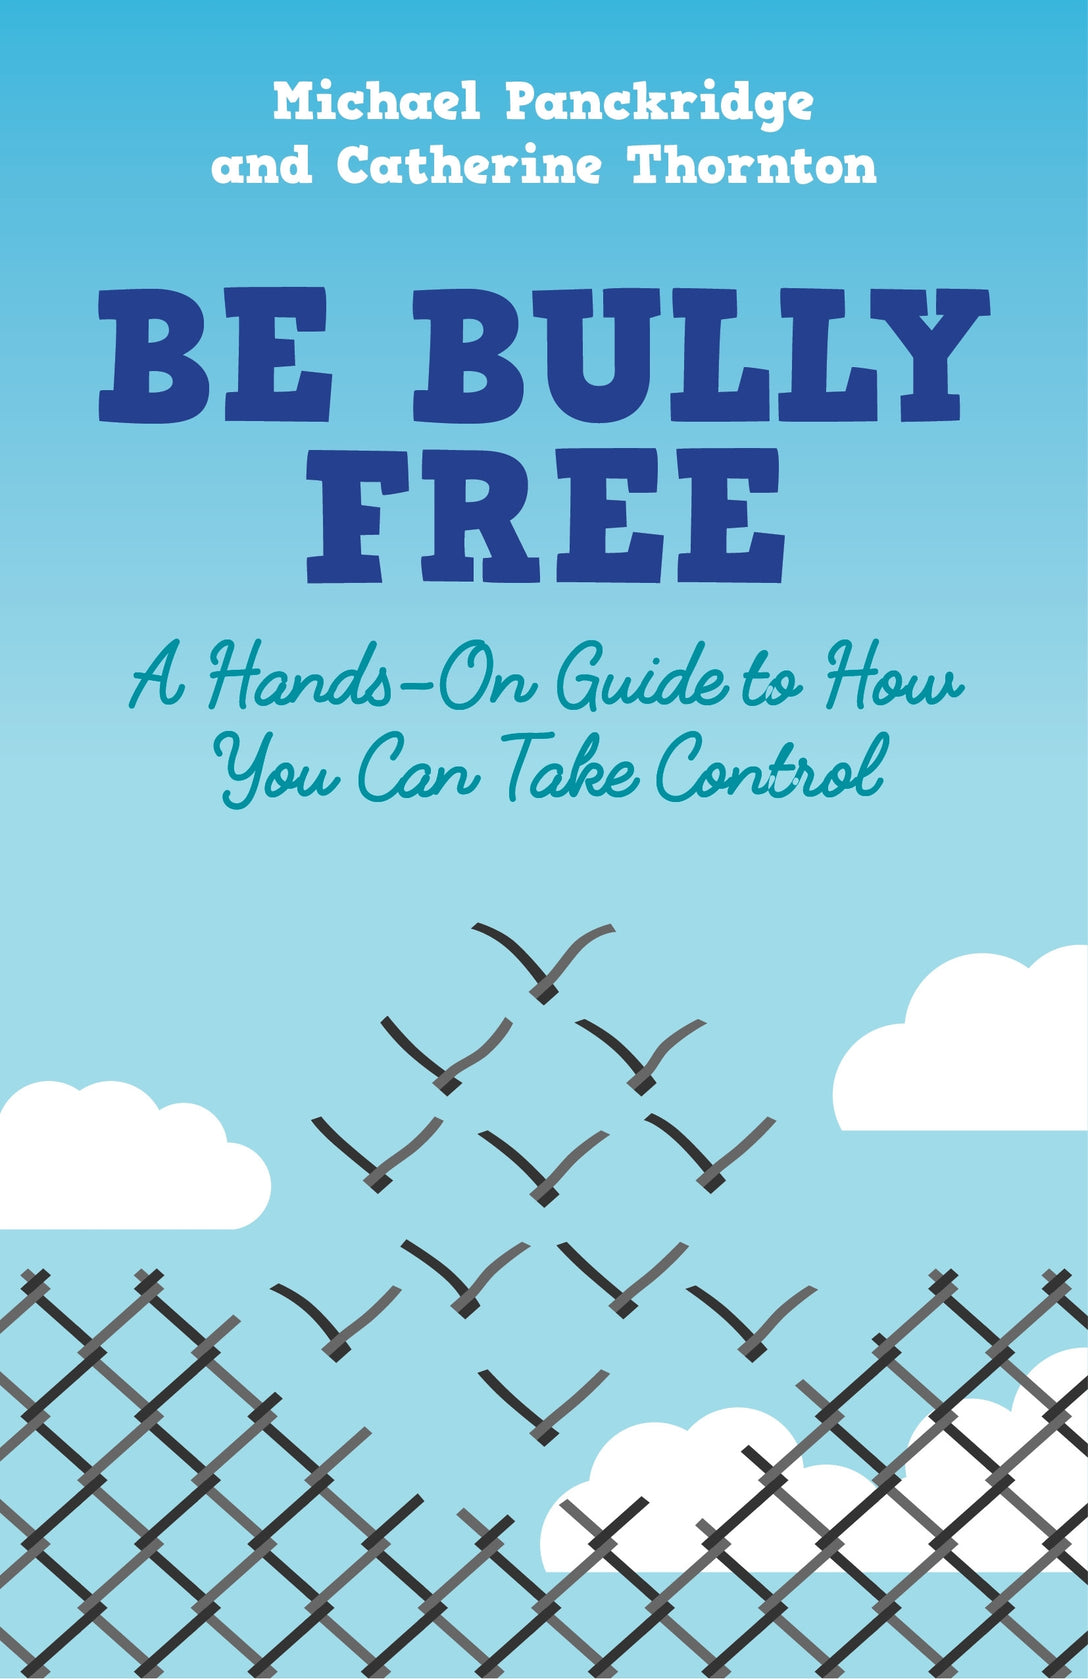 Be Bully Free by Catherine Thornton, Michael Panckridge